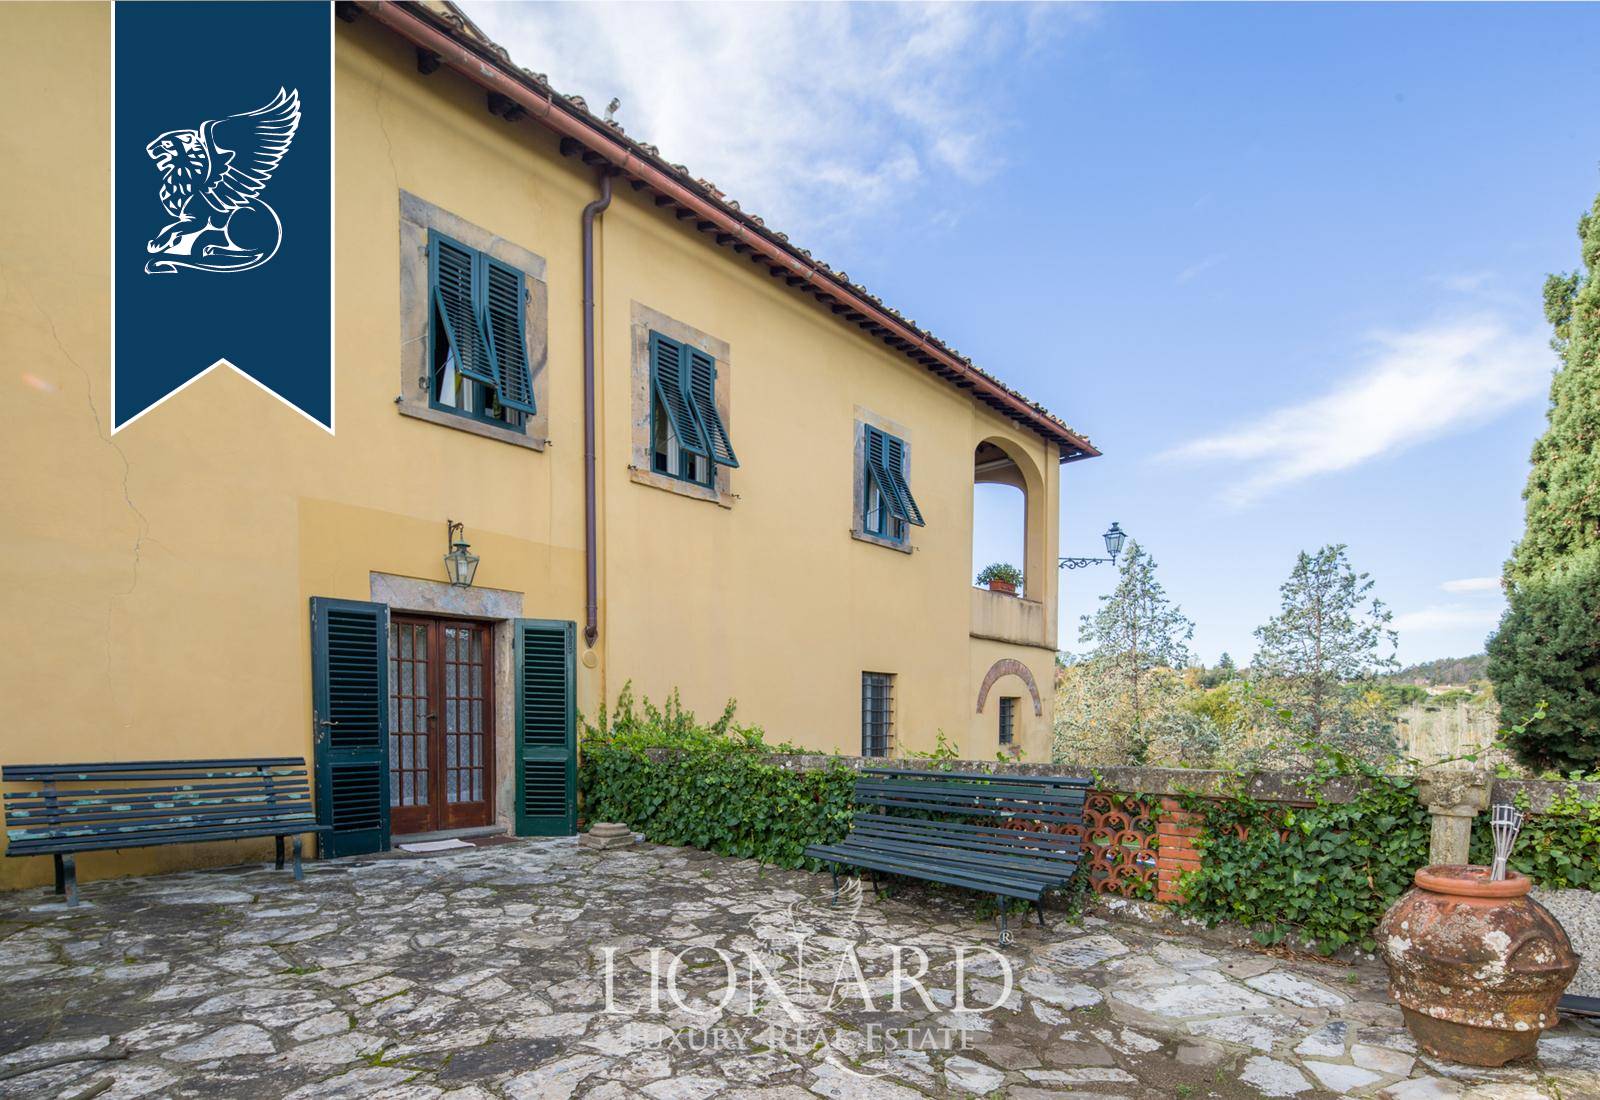 Villa in Vendita a Lucca: 0 locali, 750 mq - Foto 7